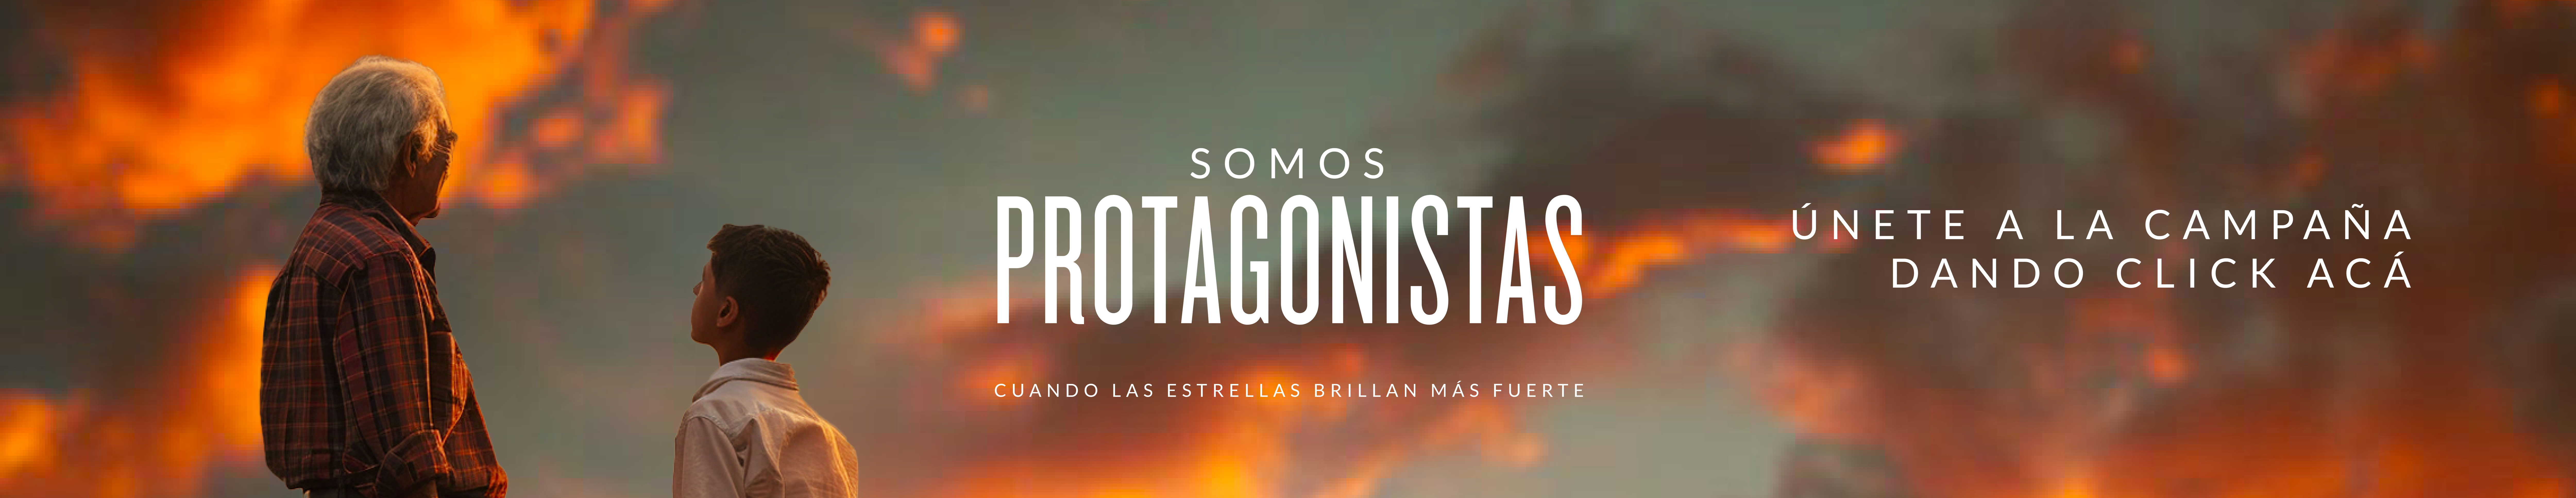 Somos Protagonistas_Website - Banner (1)